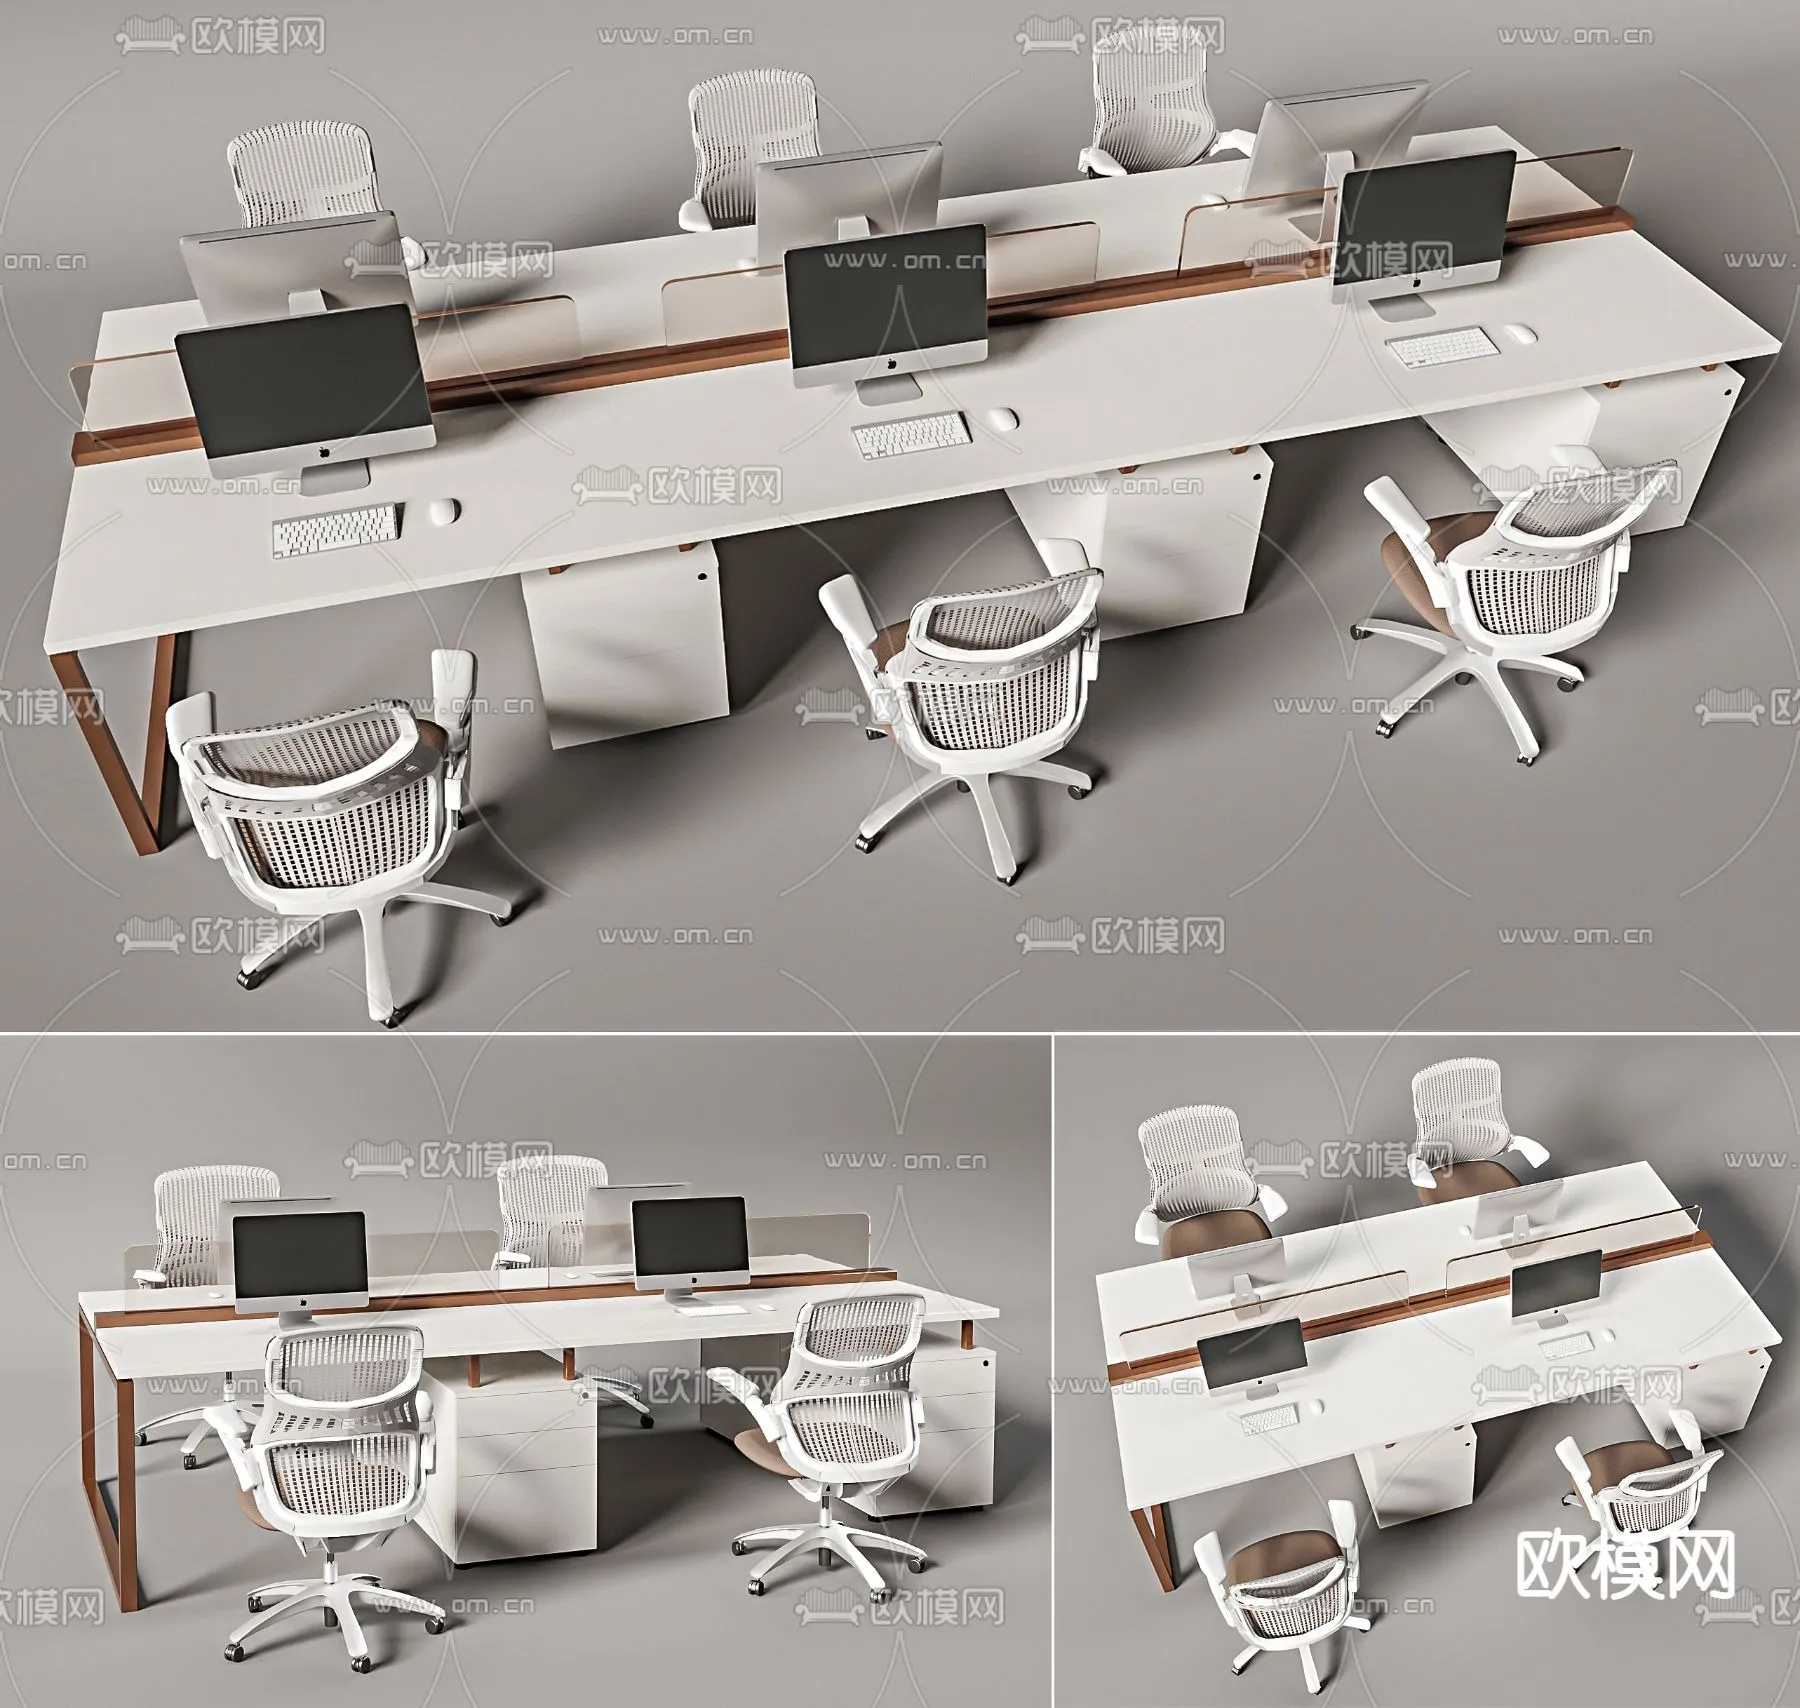 OFFICE 3D MODELS – 002